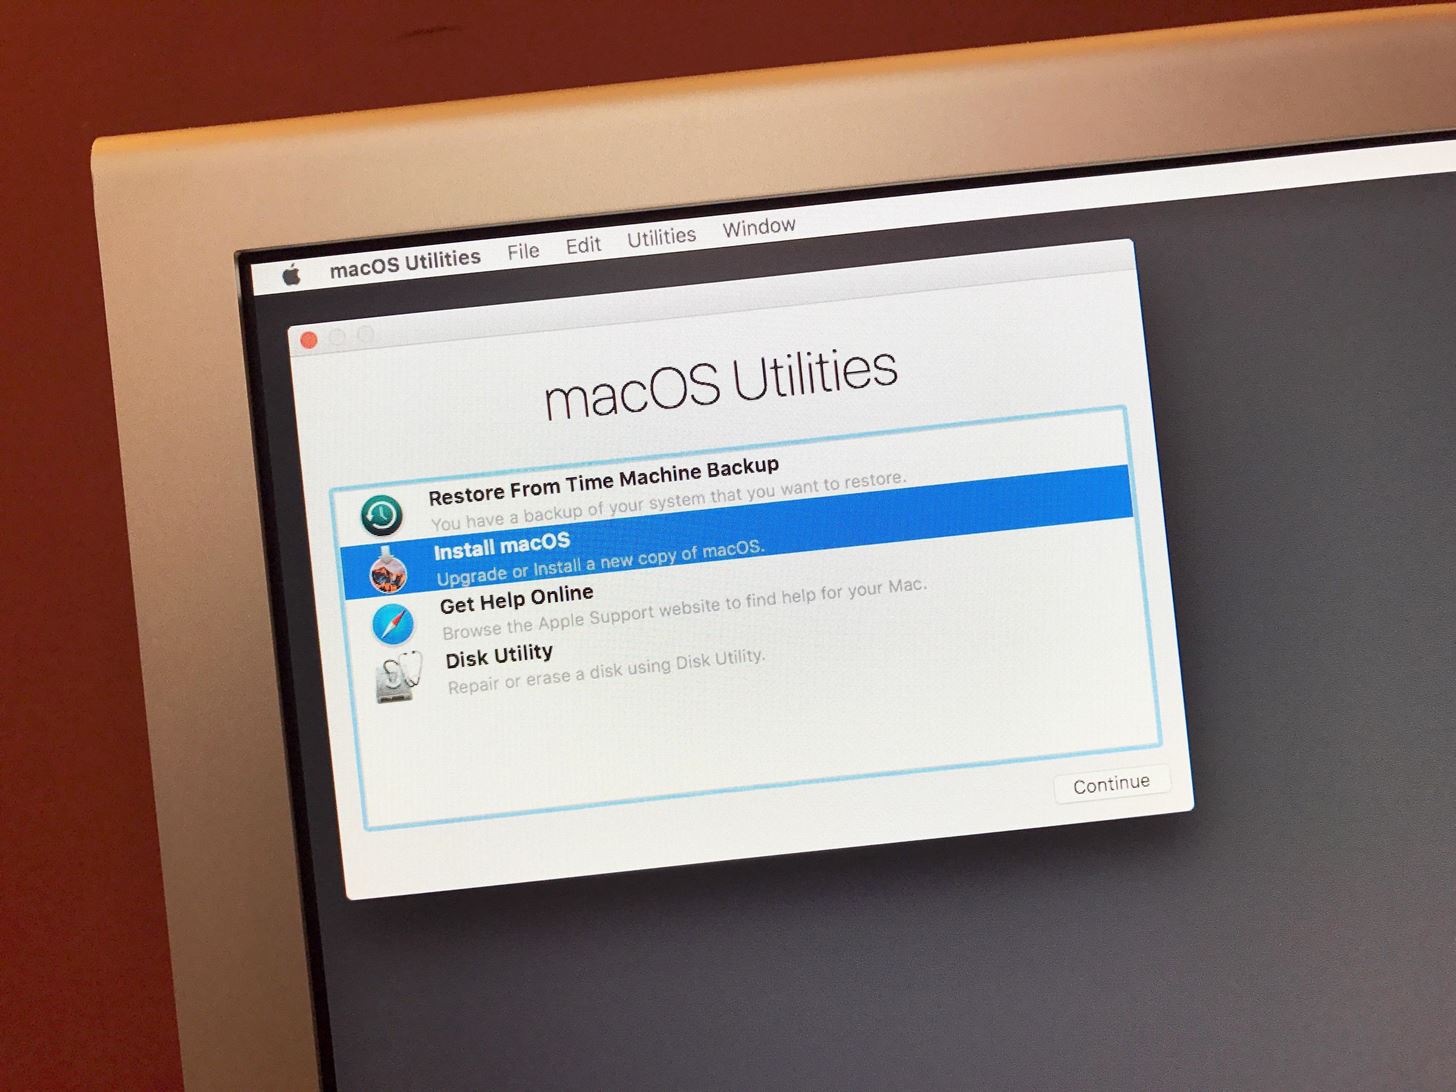 create a bootable usb flash drive for windows 10 on mac os siera